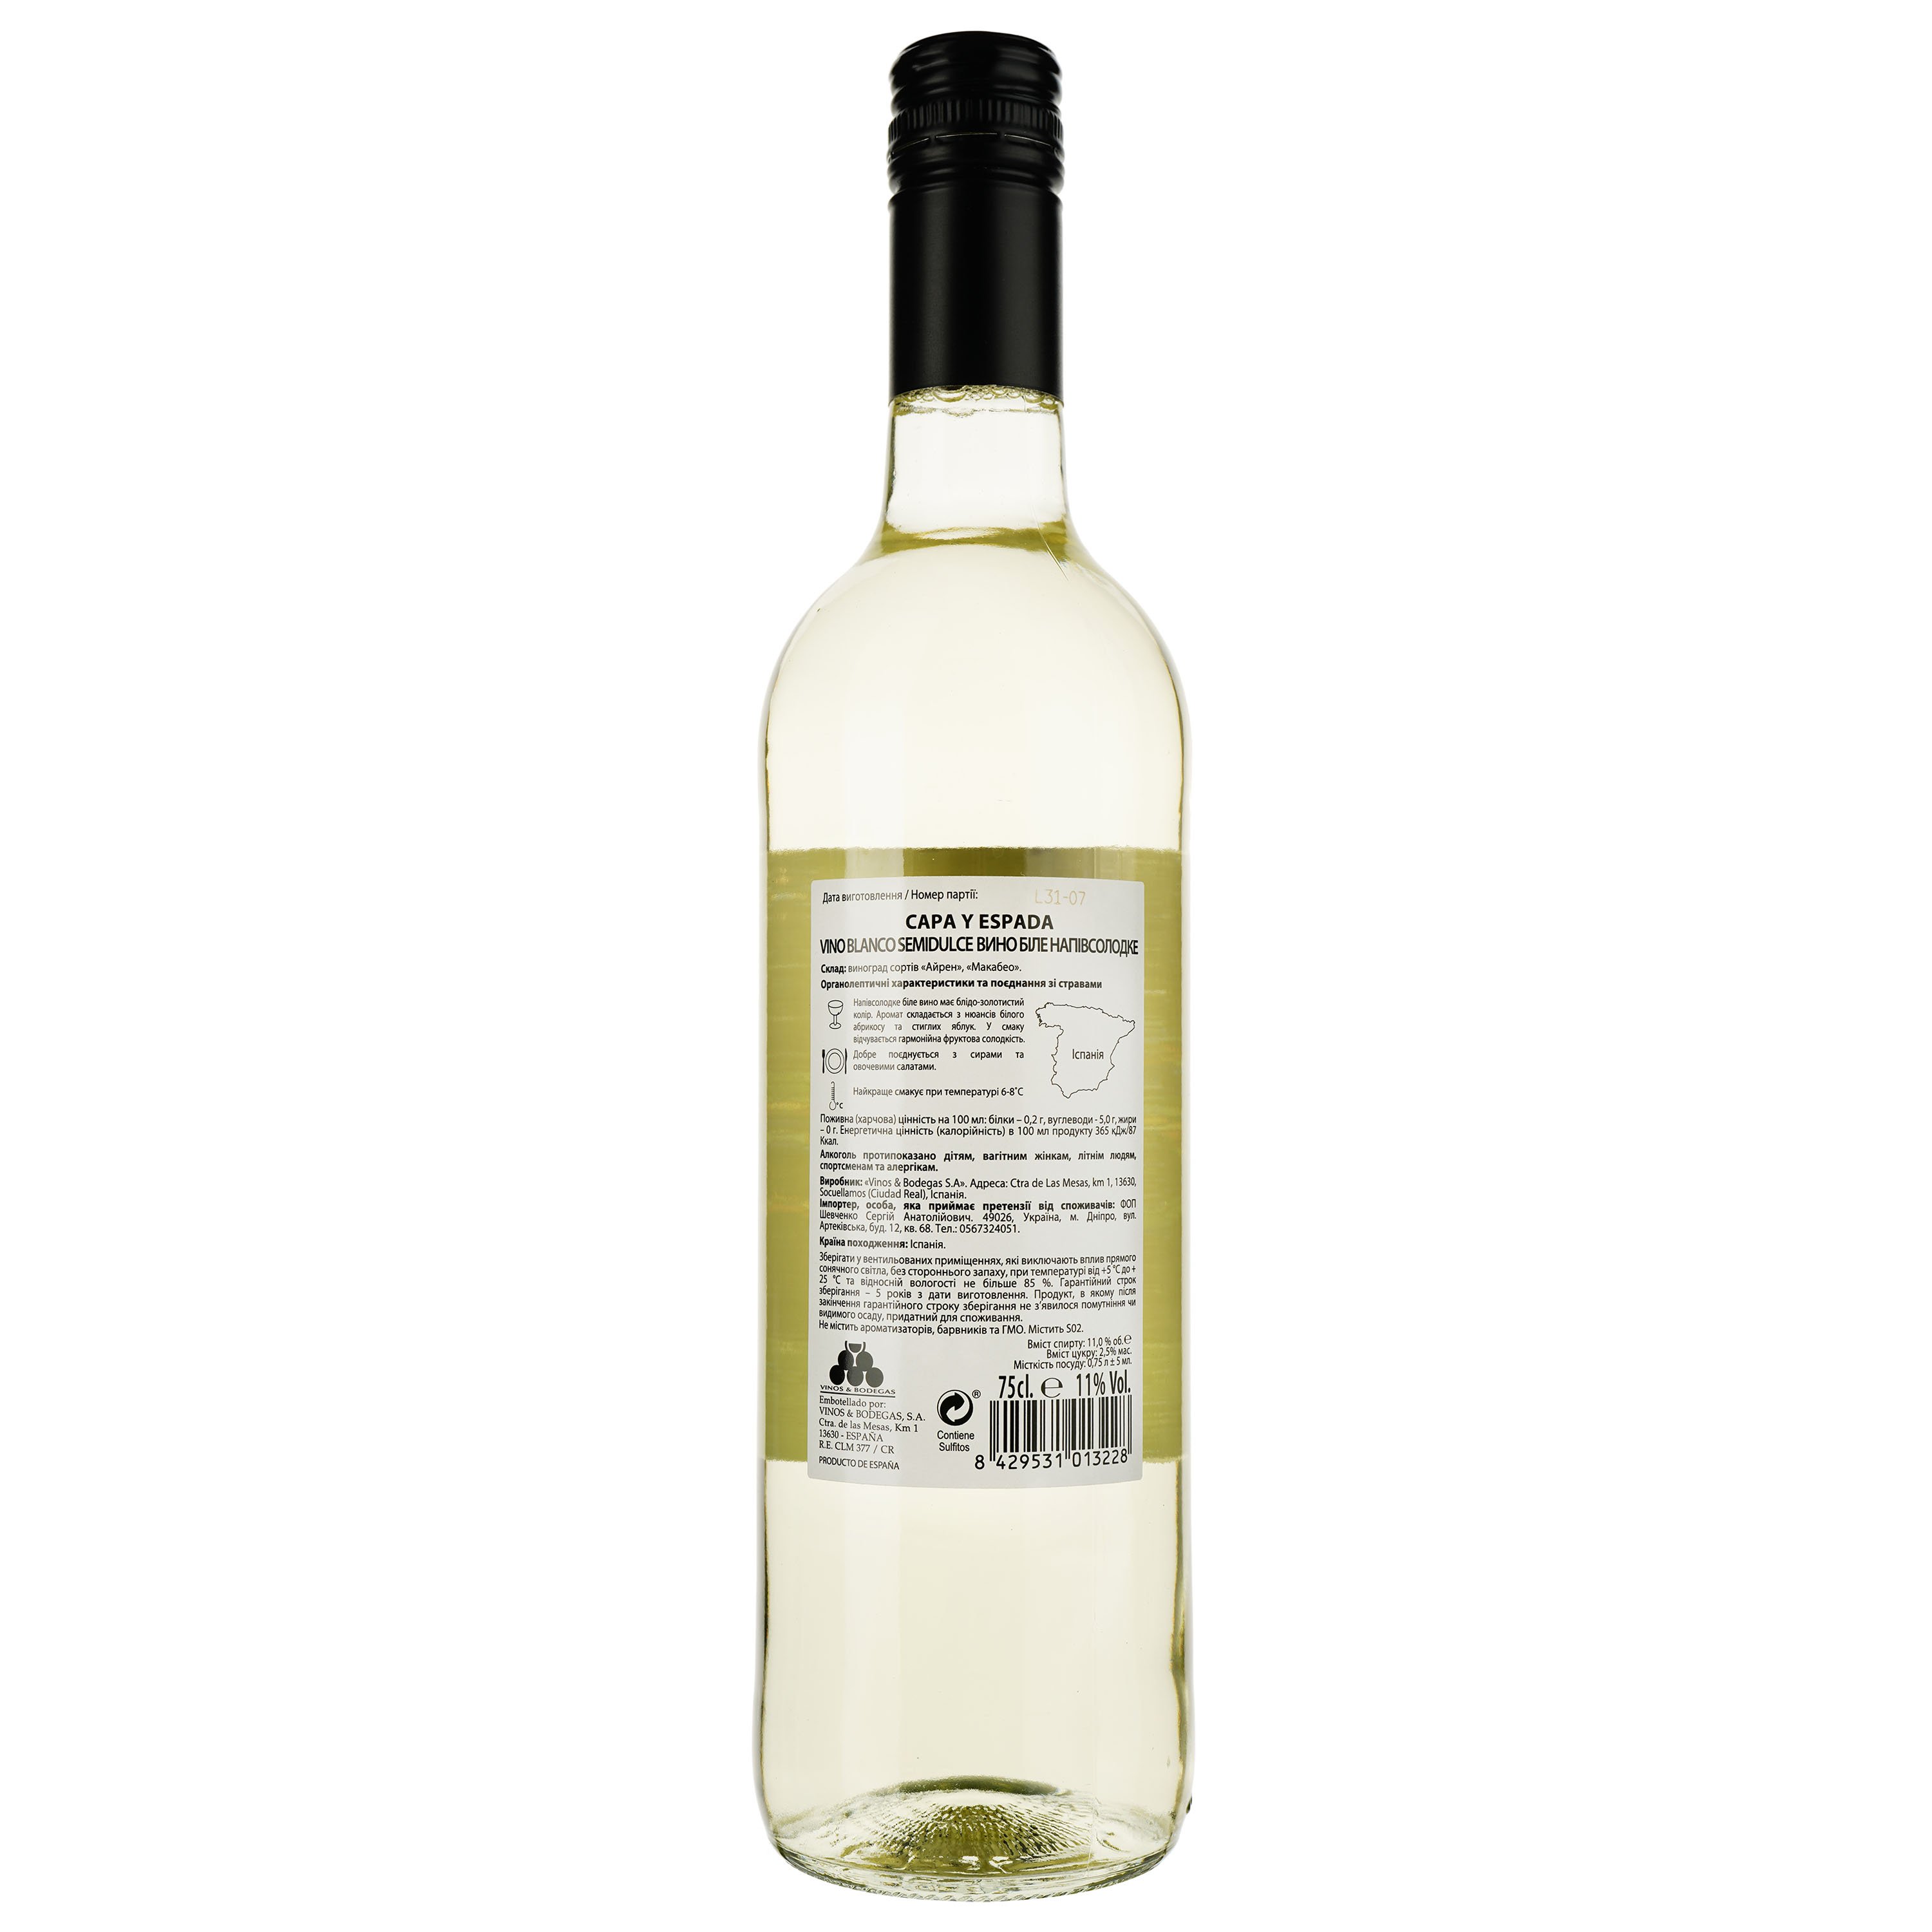 Вино Capa y Espada Vino Blanco Semidulce, белое, полусладкое, 0,75 л - фото 2